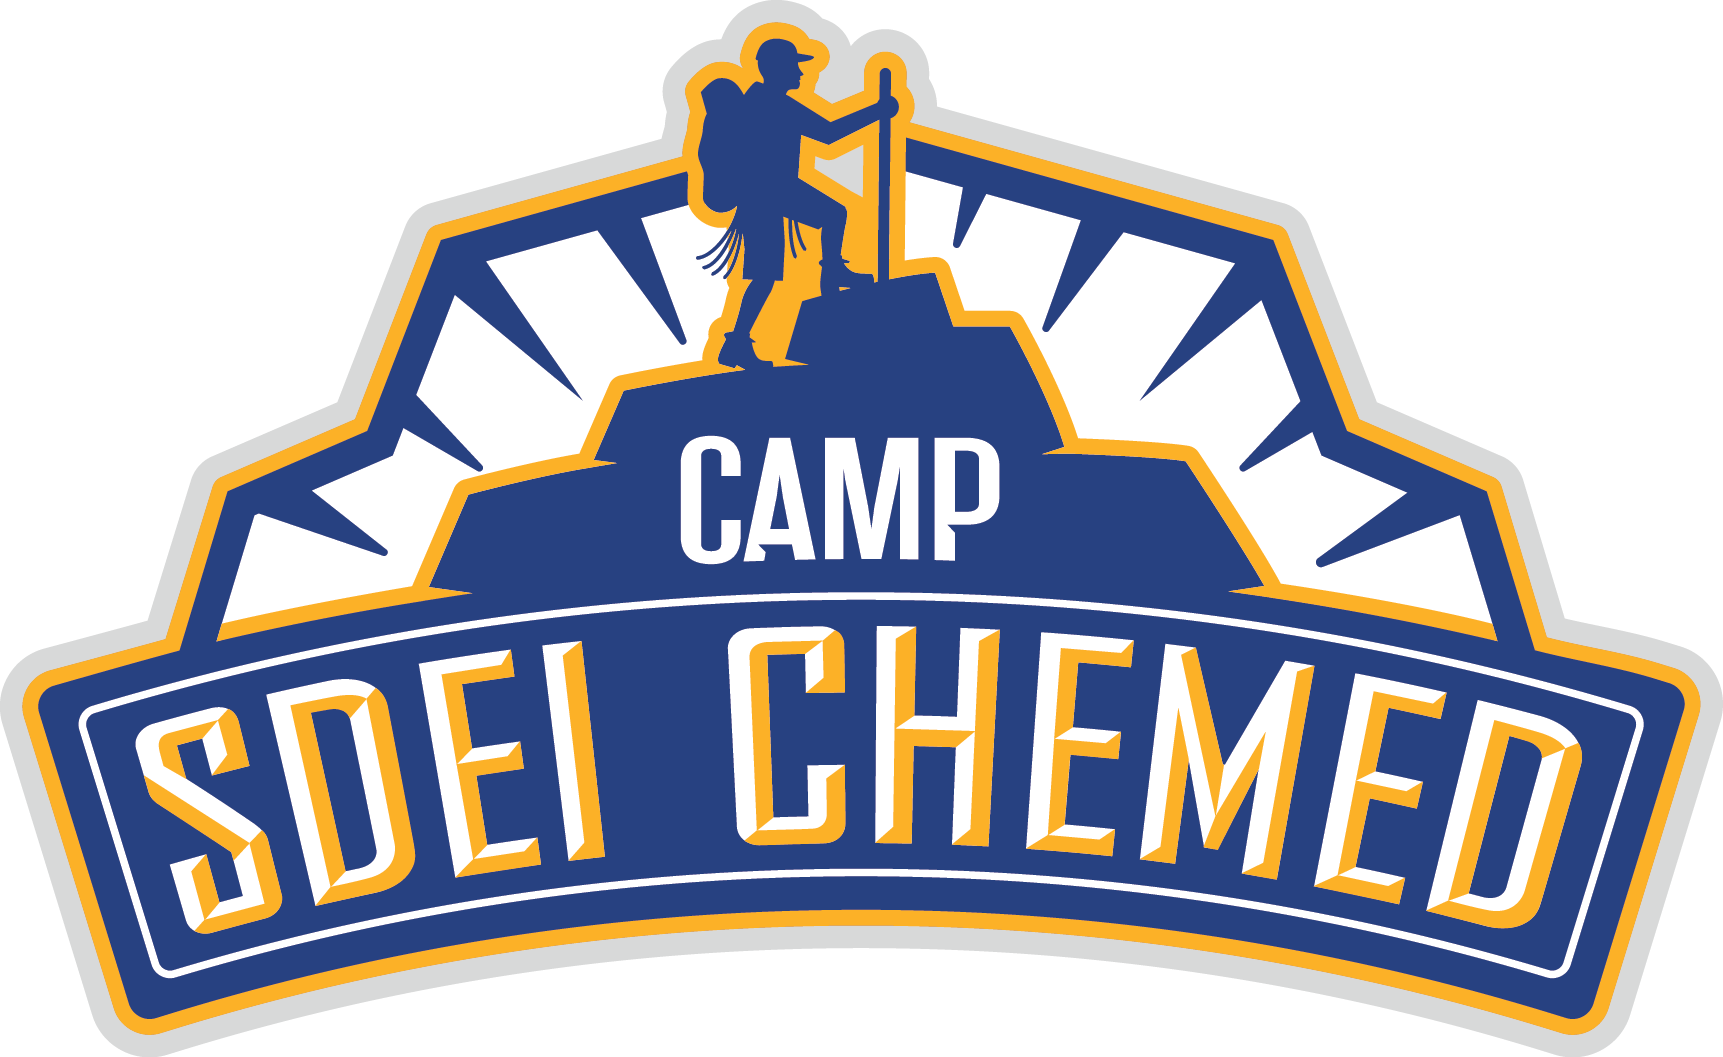 Camp Sdei Chemed International